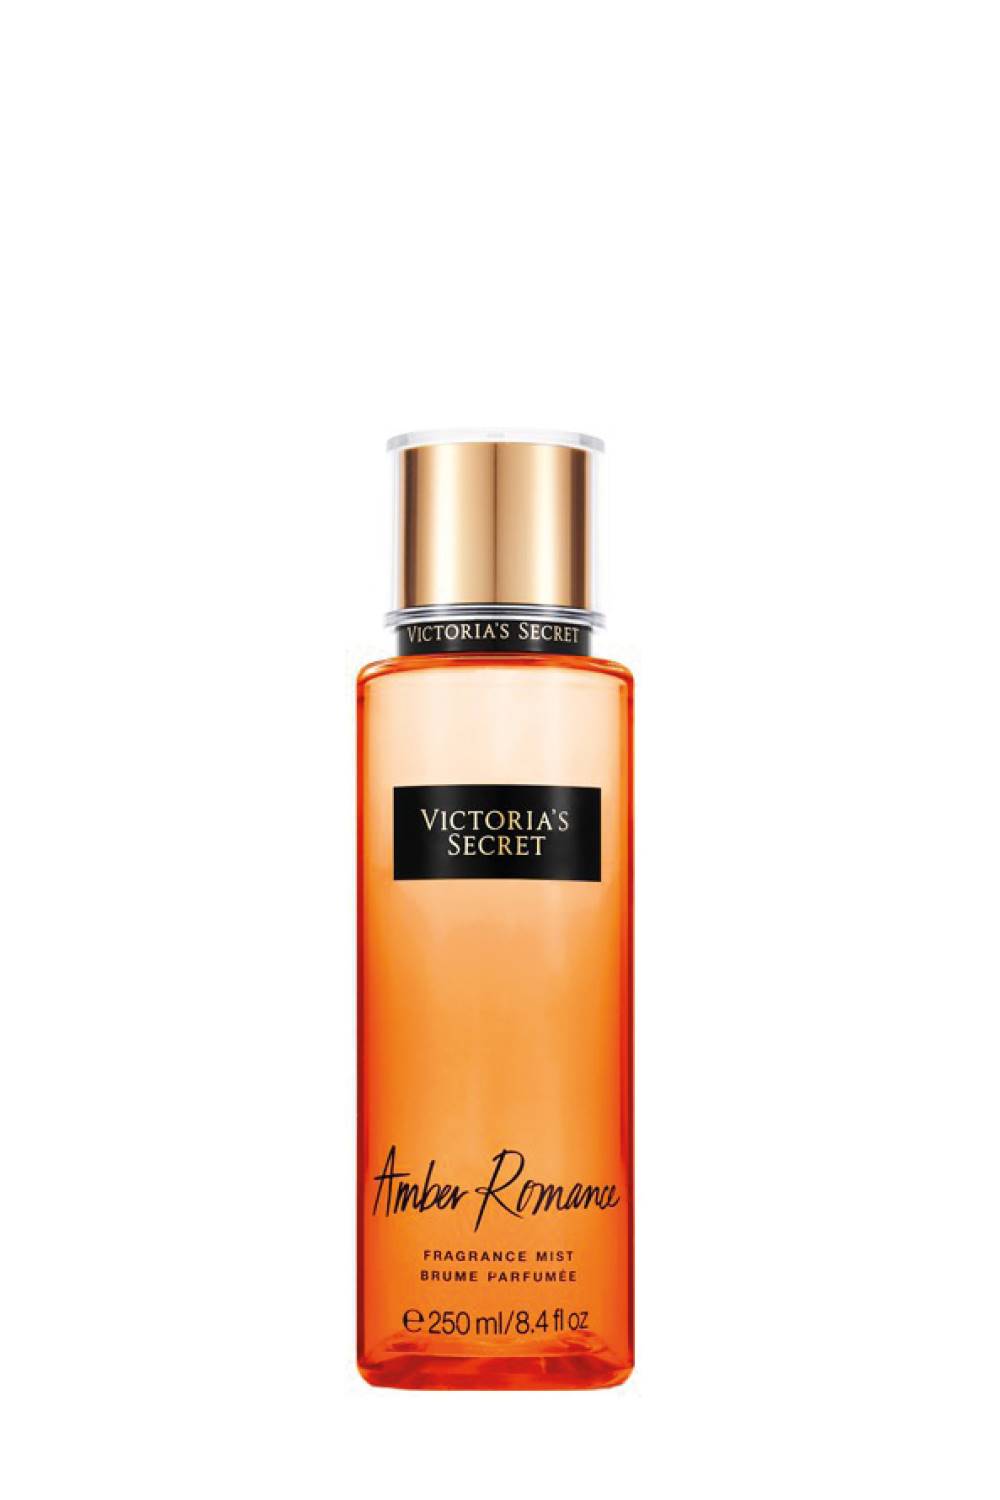 Perfume de Victoria's Secret